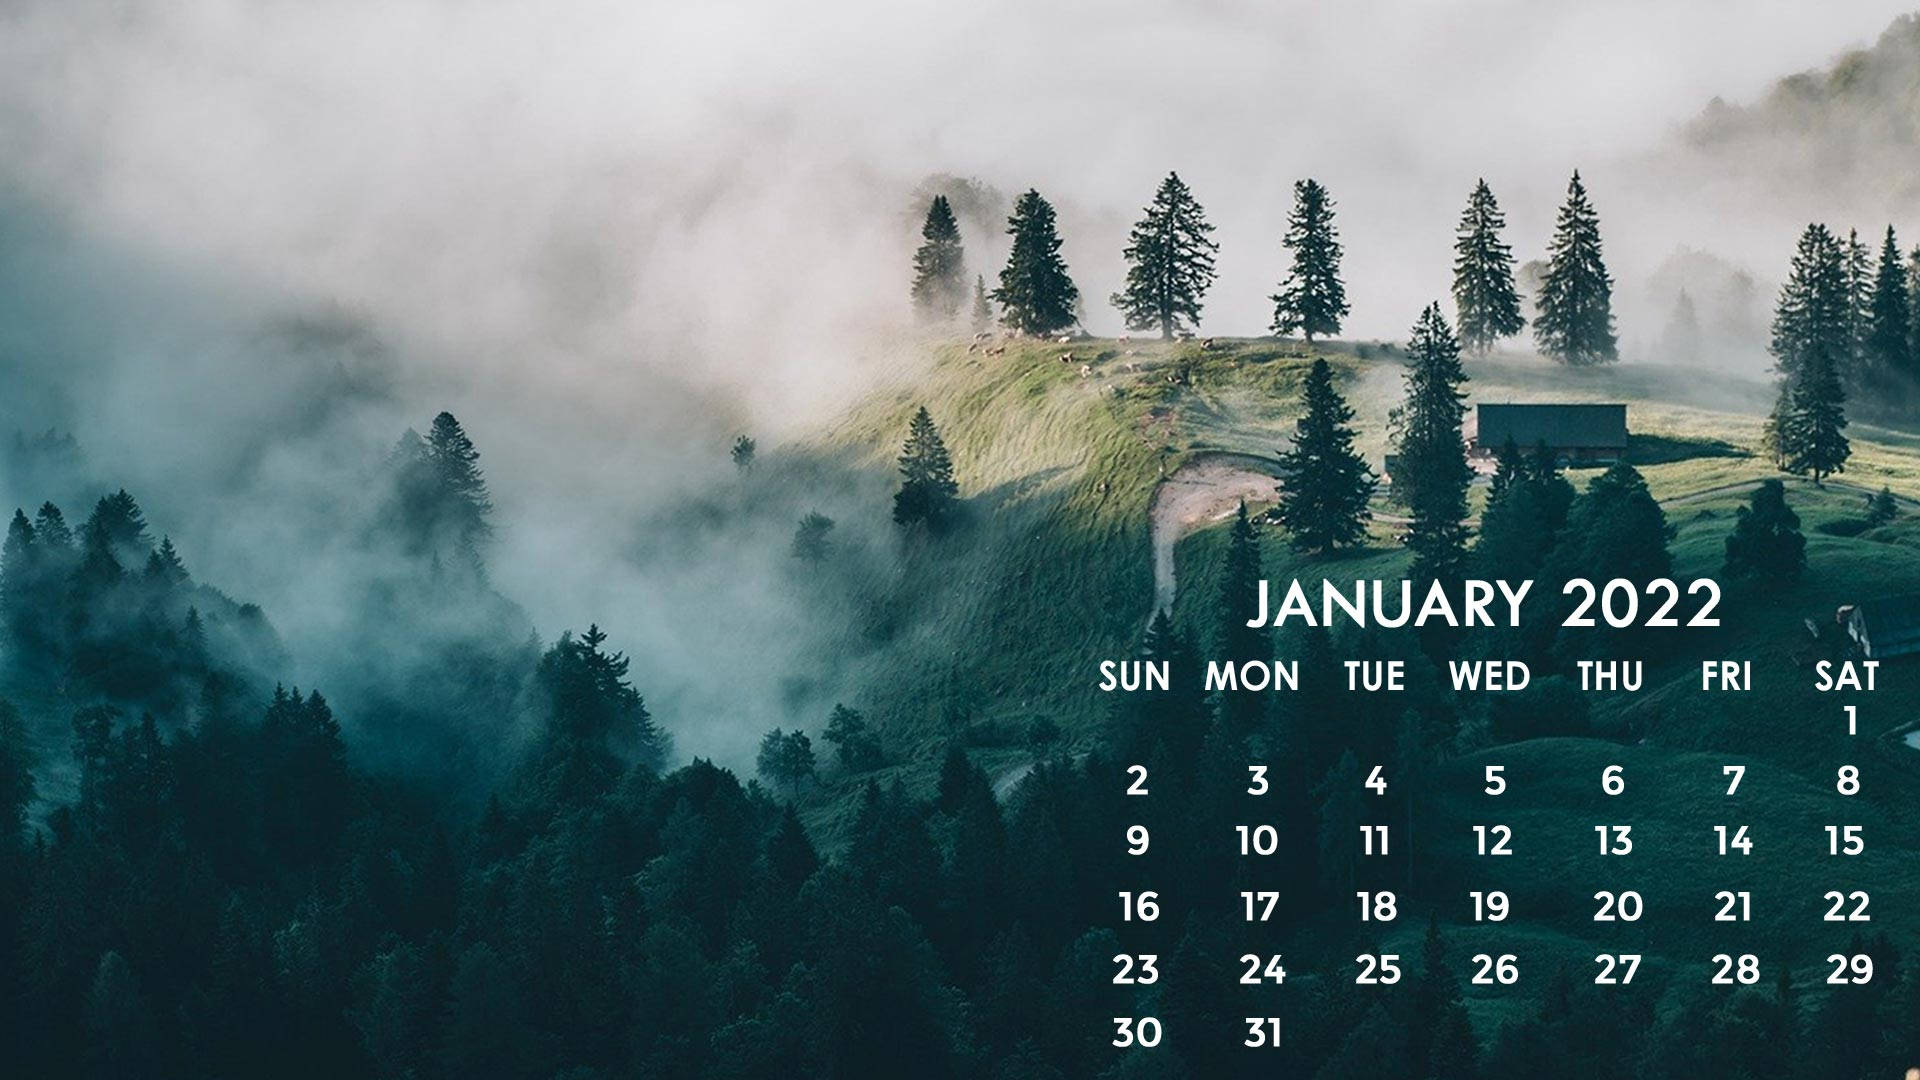 Foggy Mountain Top January 2022 Calendar Wallpaper